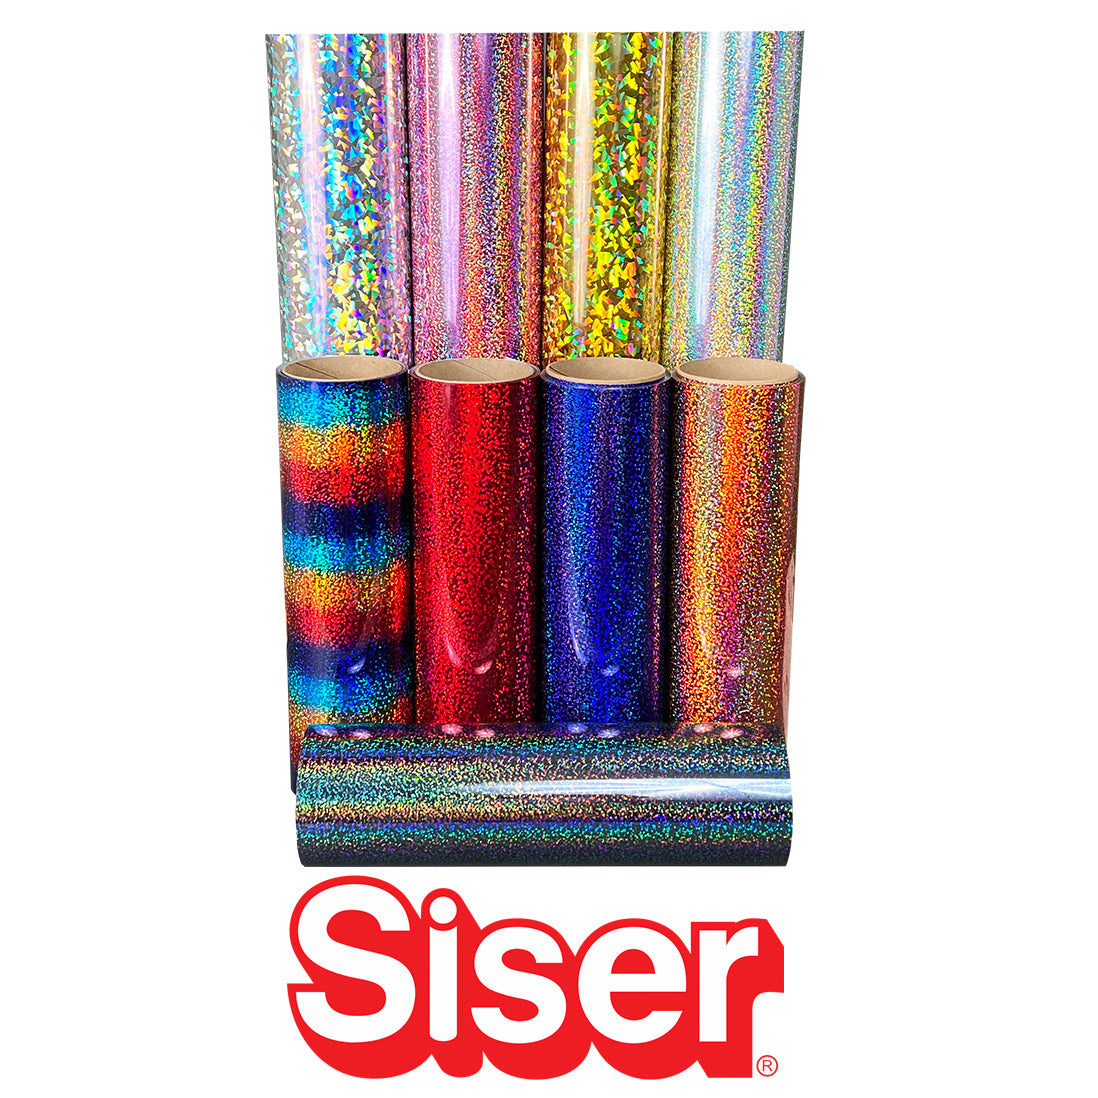 SISER EasyReflective HTV - Heat Transfer Vinyl - Silver Reflective